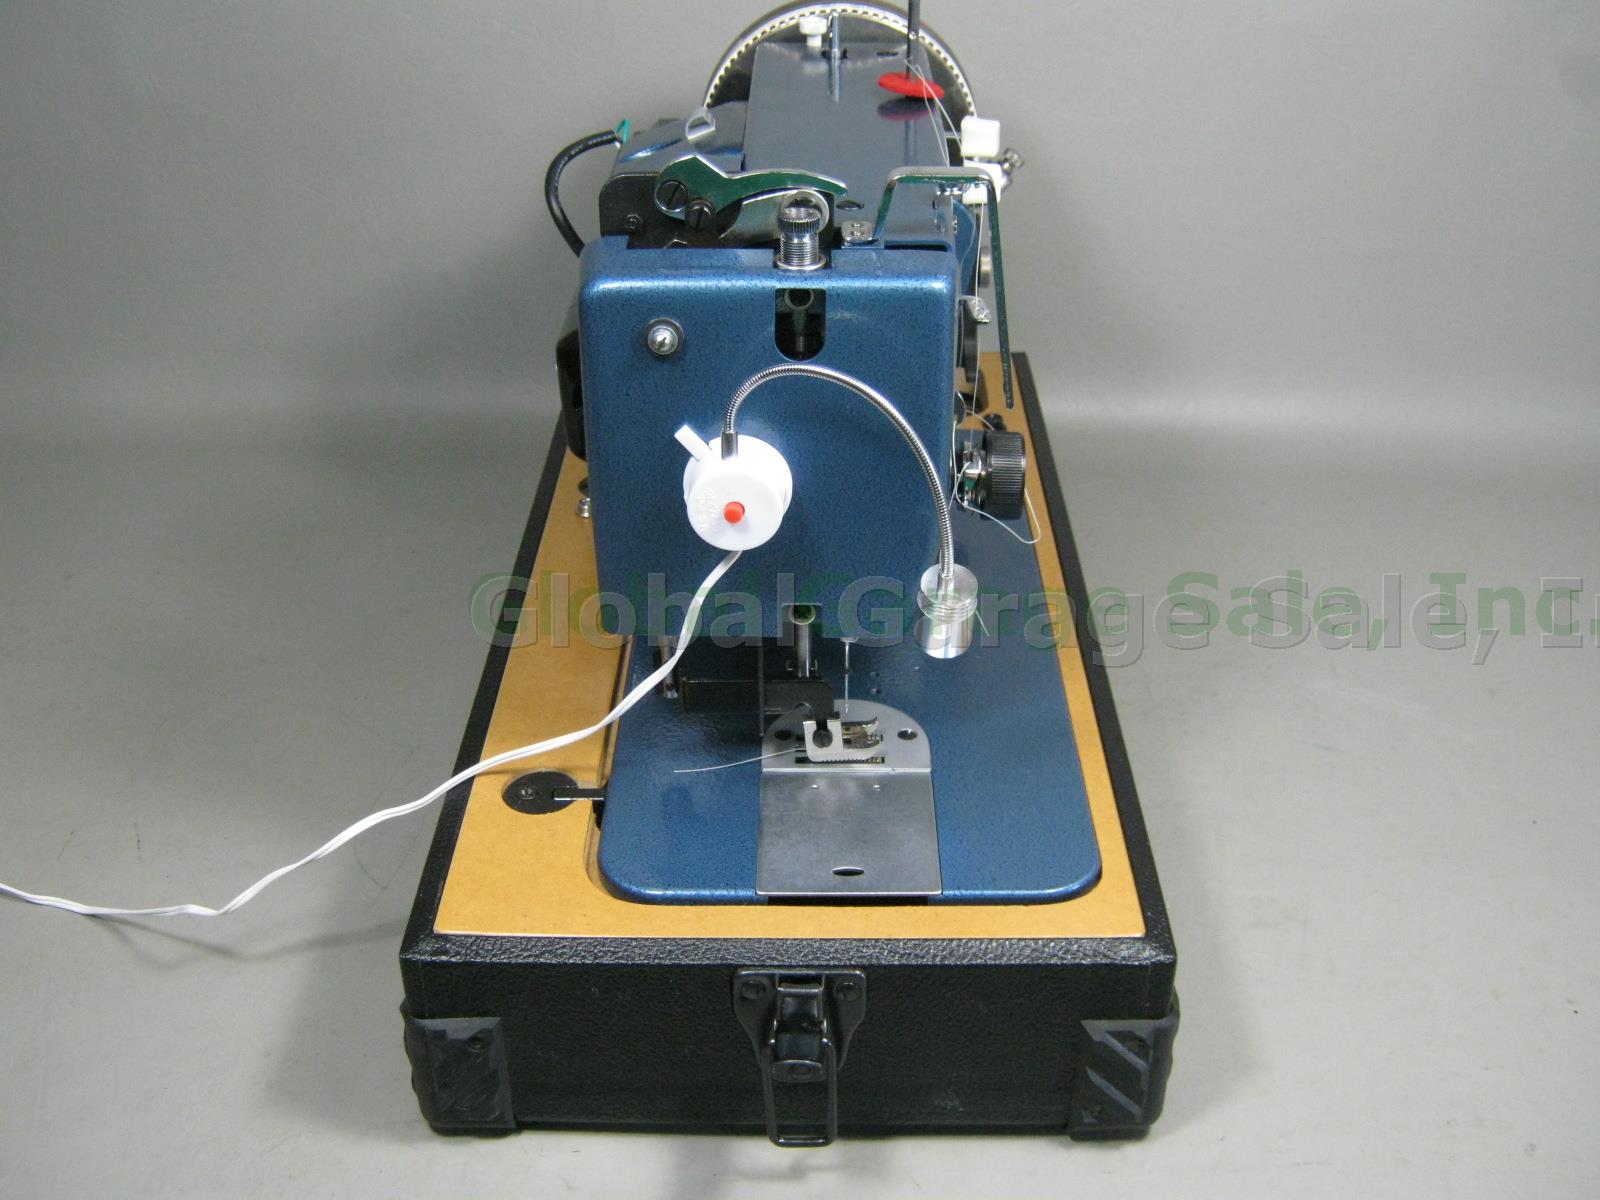 Sailrite Ultrafeed Zigzag LSZ-1 Walking Foot Sewing Machine W/ Case Pedal Lot NR 6